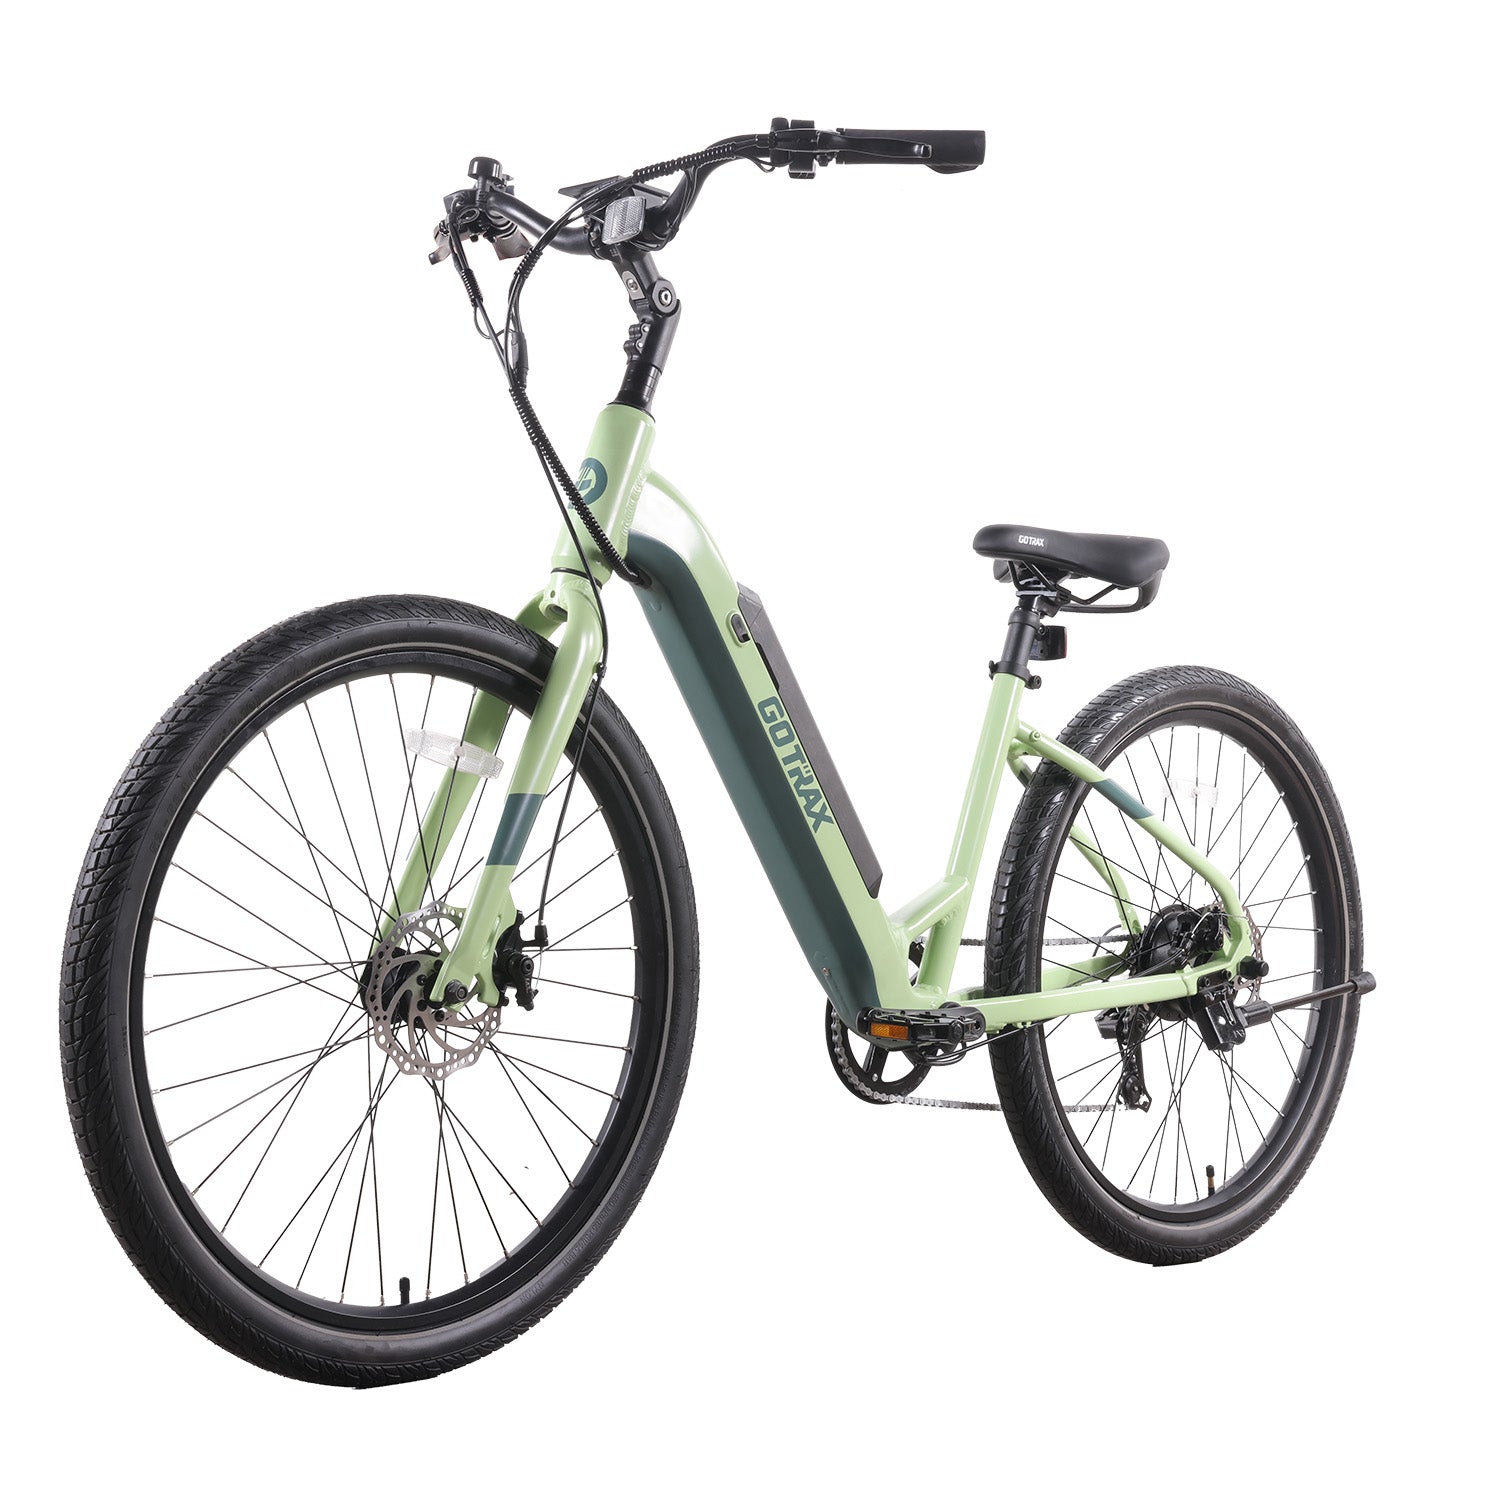 CTI Electric Bike - GOTRAX